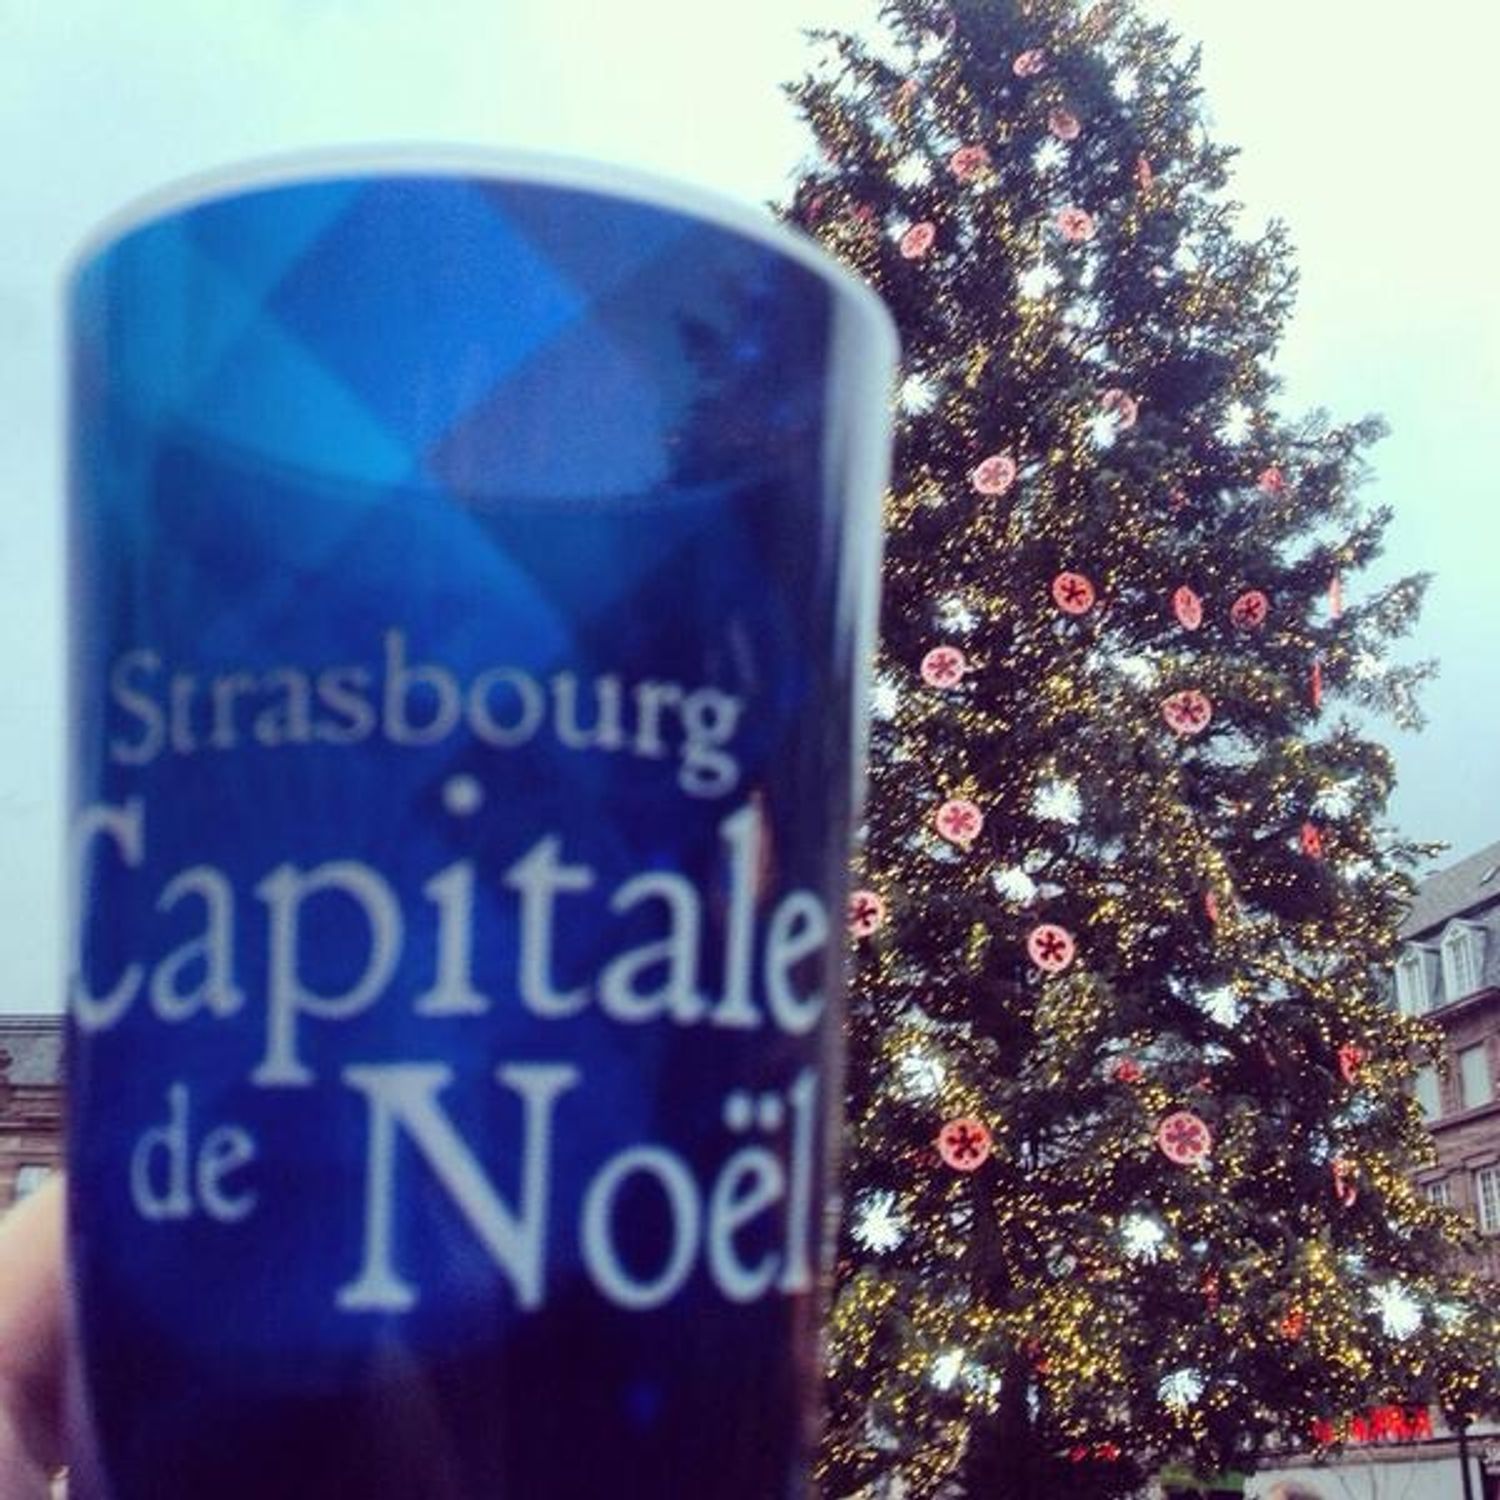 Strasbourg capitale de Noël gobelet sapin illustration